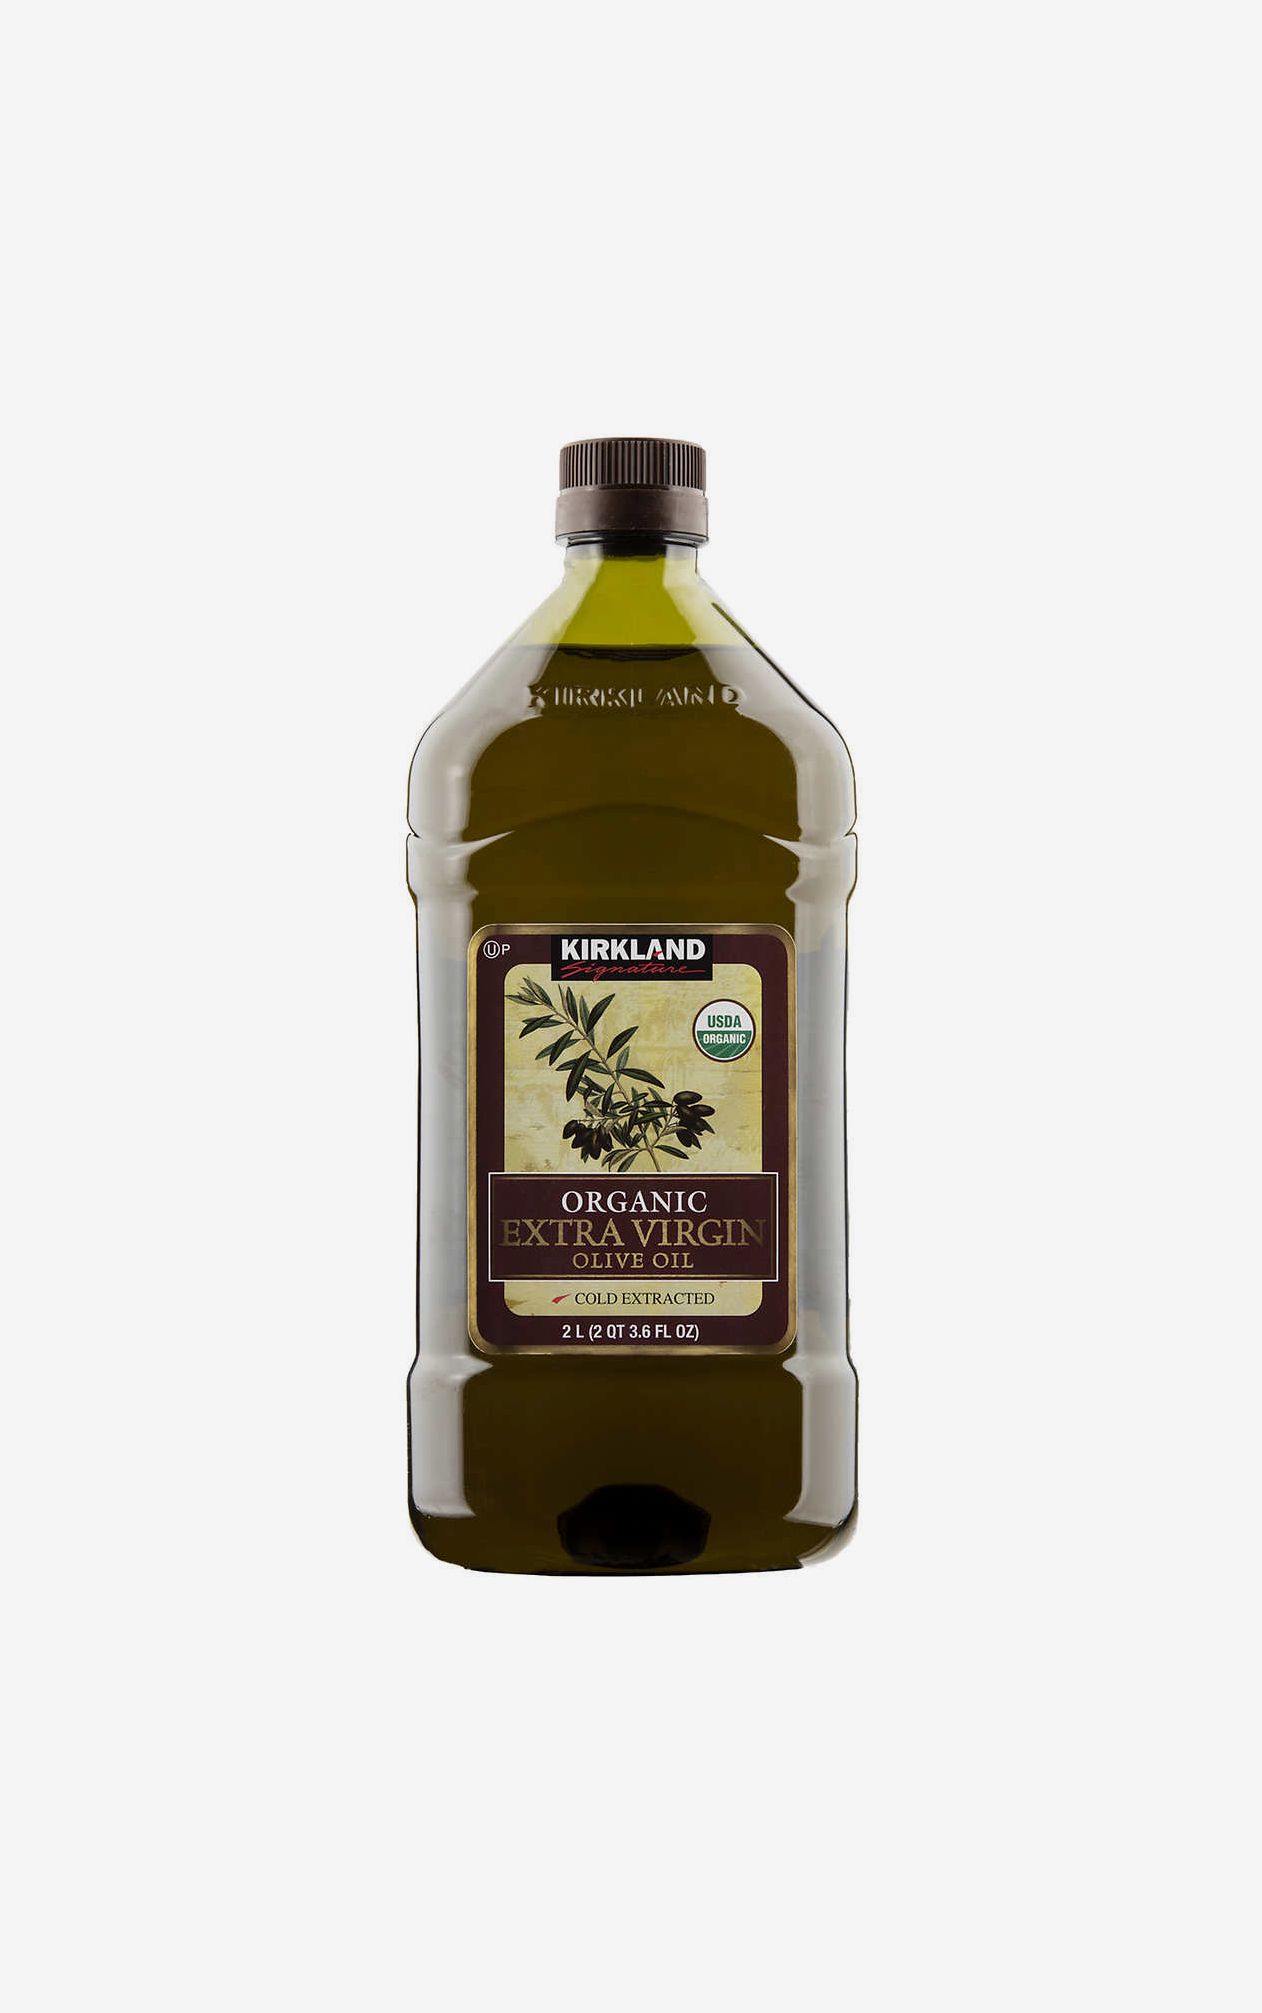 Buy Bulk - Olive Oil - Extra Virgin Organic